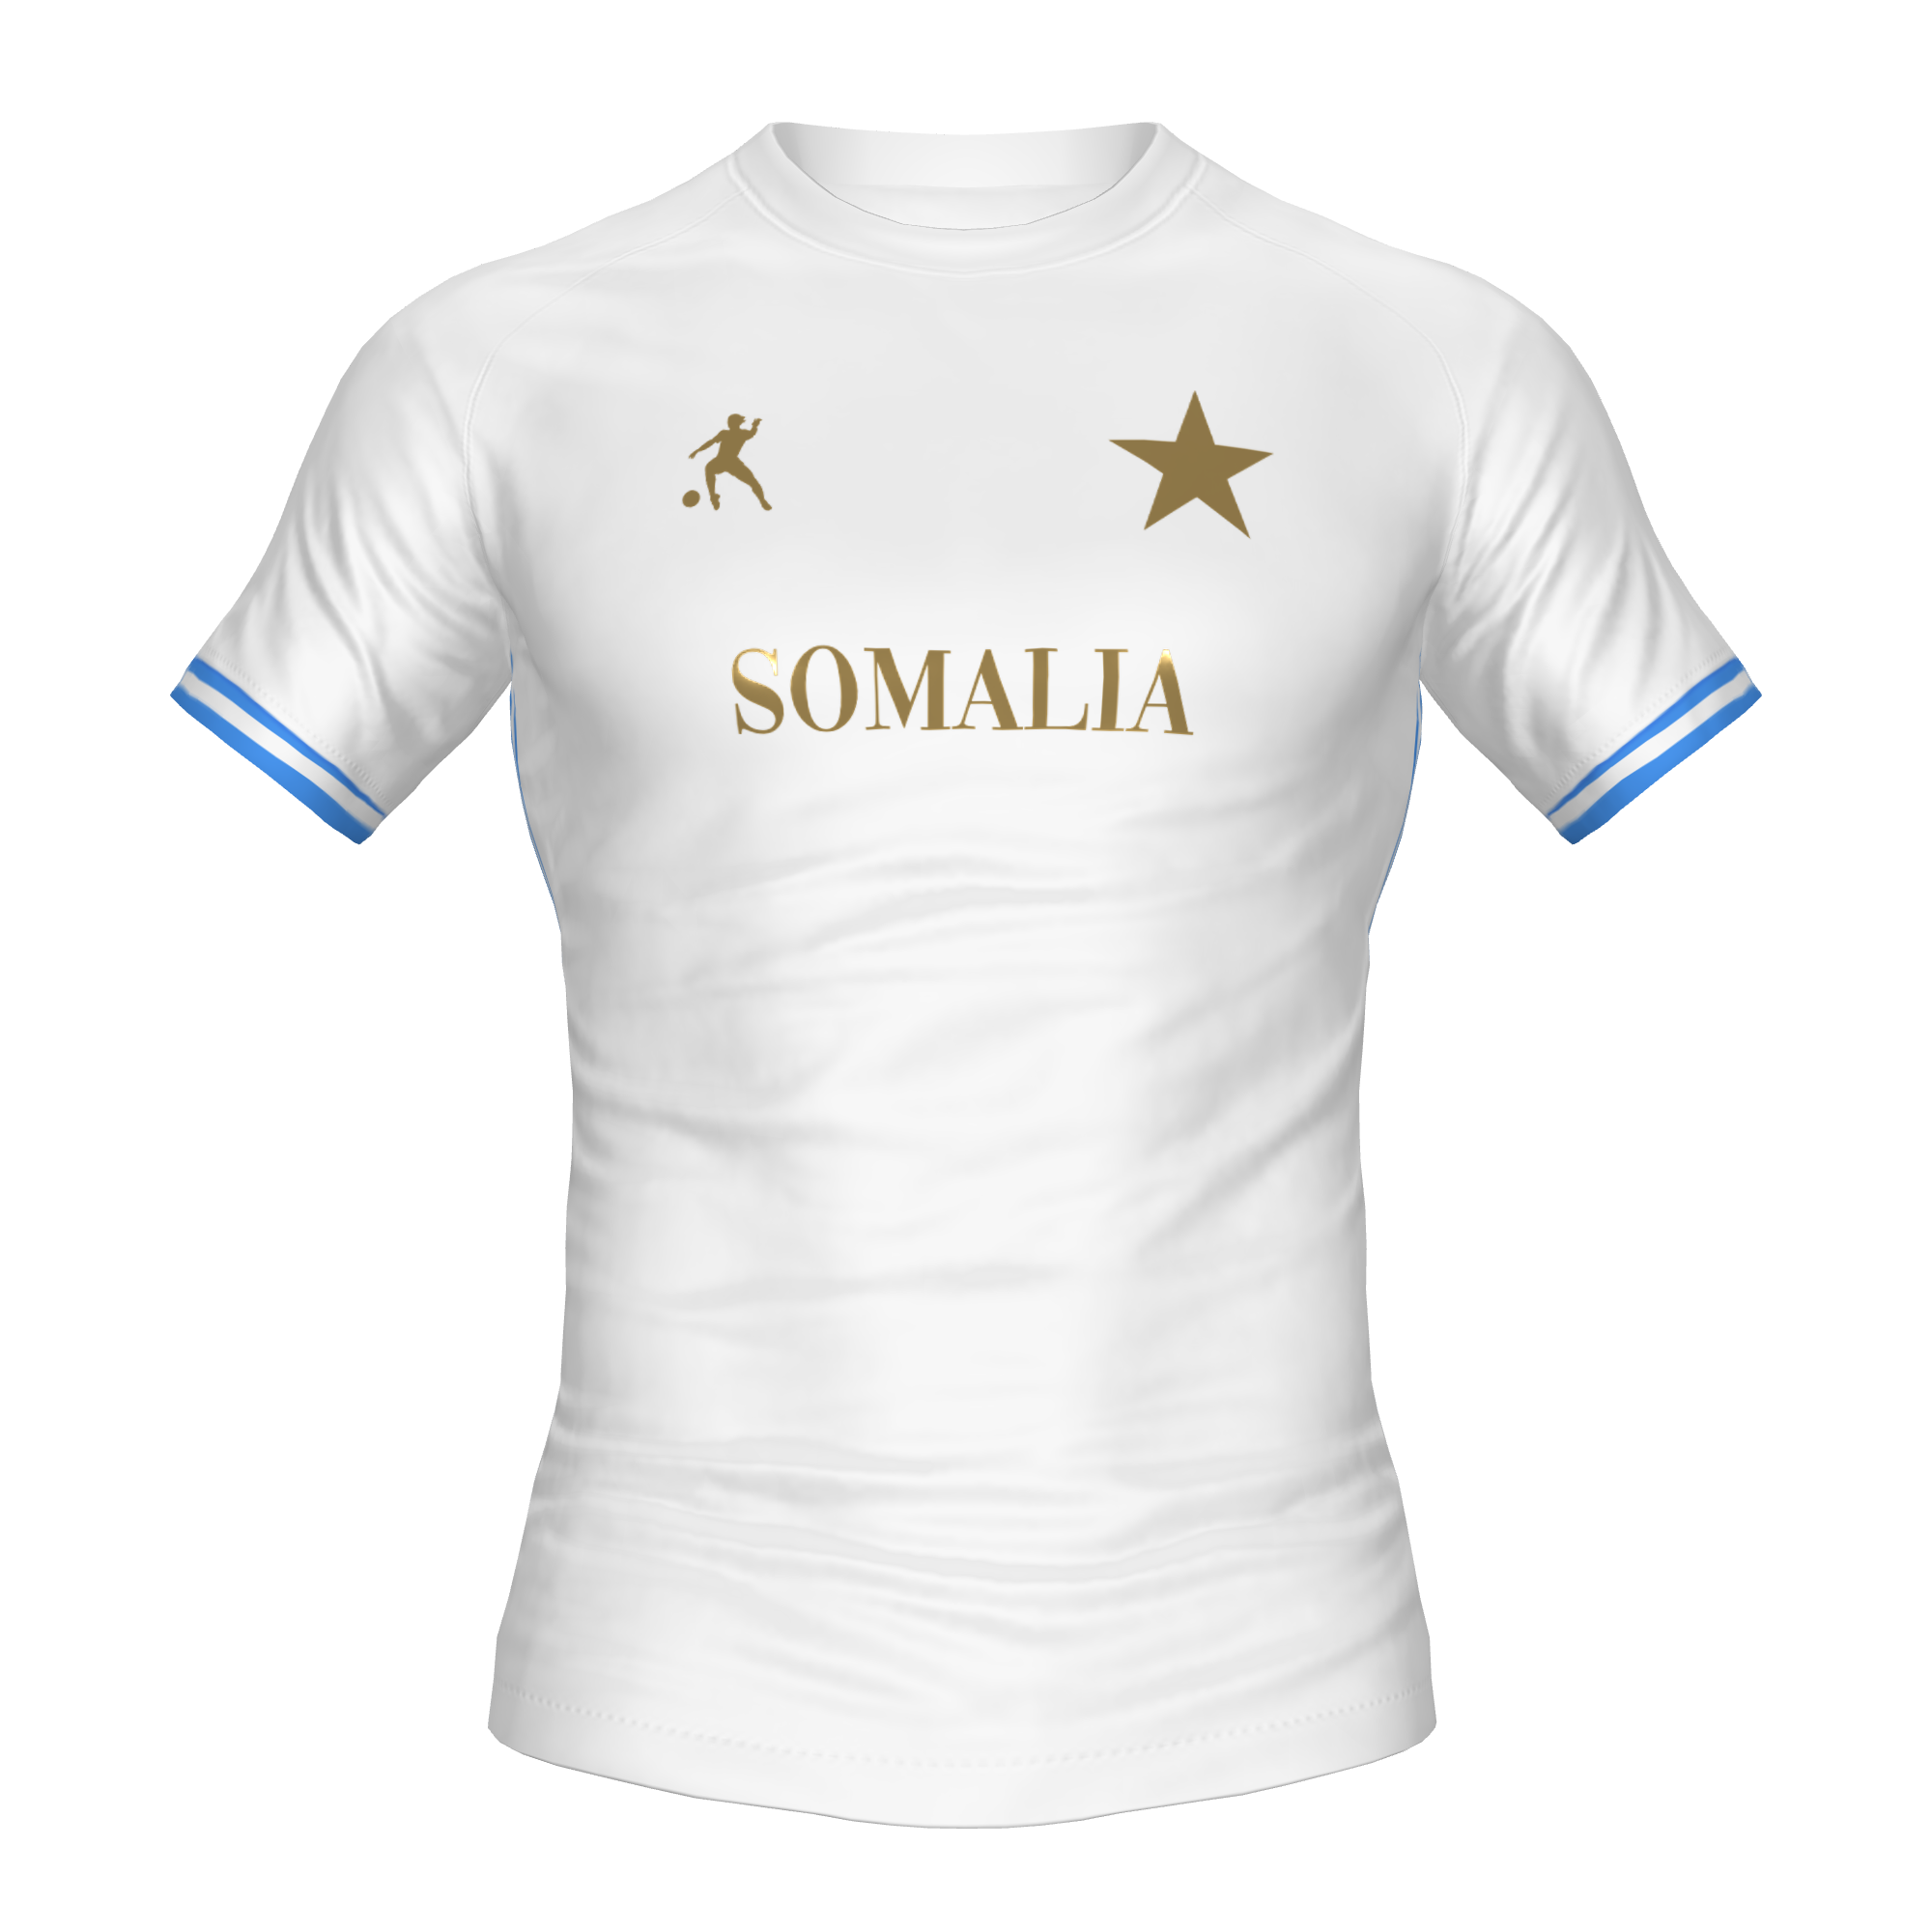 SOMALIA FOOTBALL SHIRT